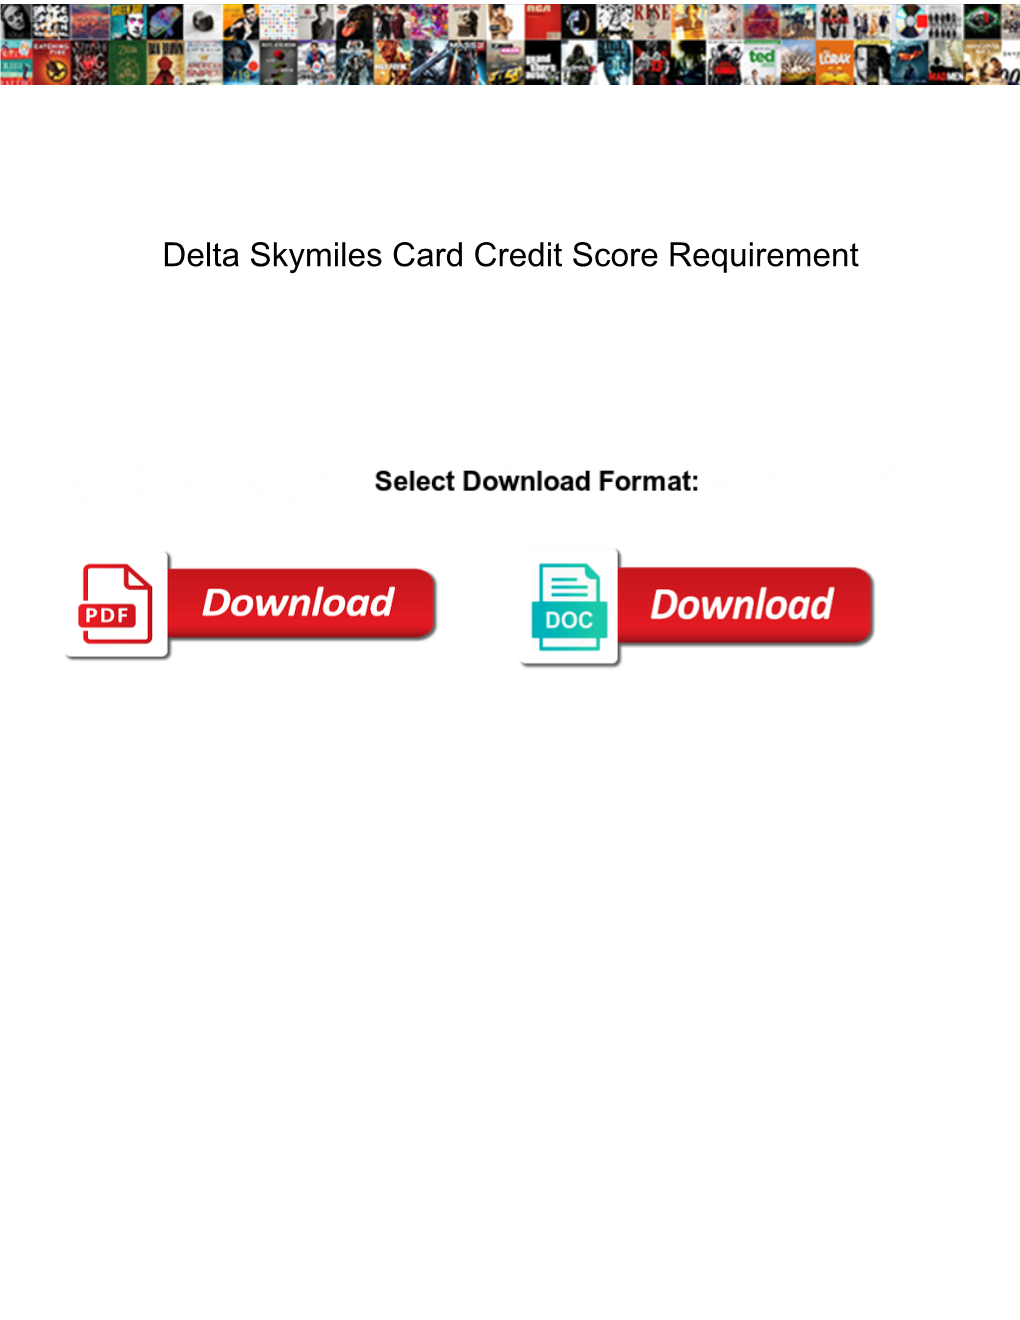 Delta Skymiles Card Credit Score Requirement